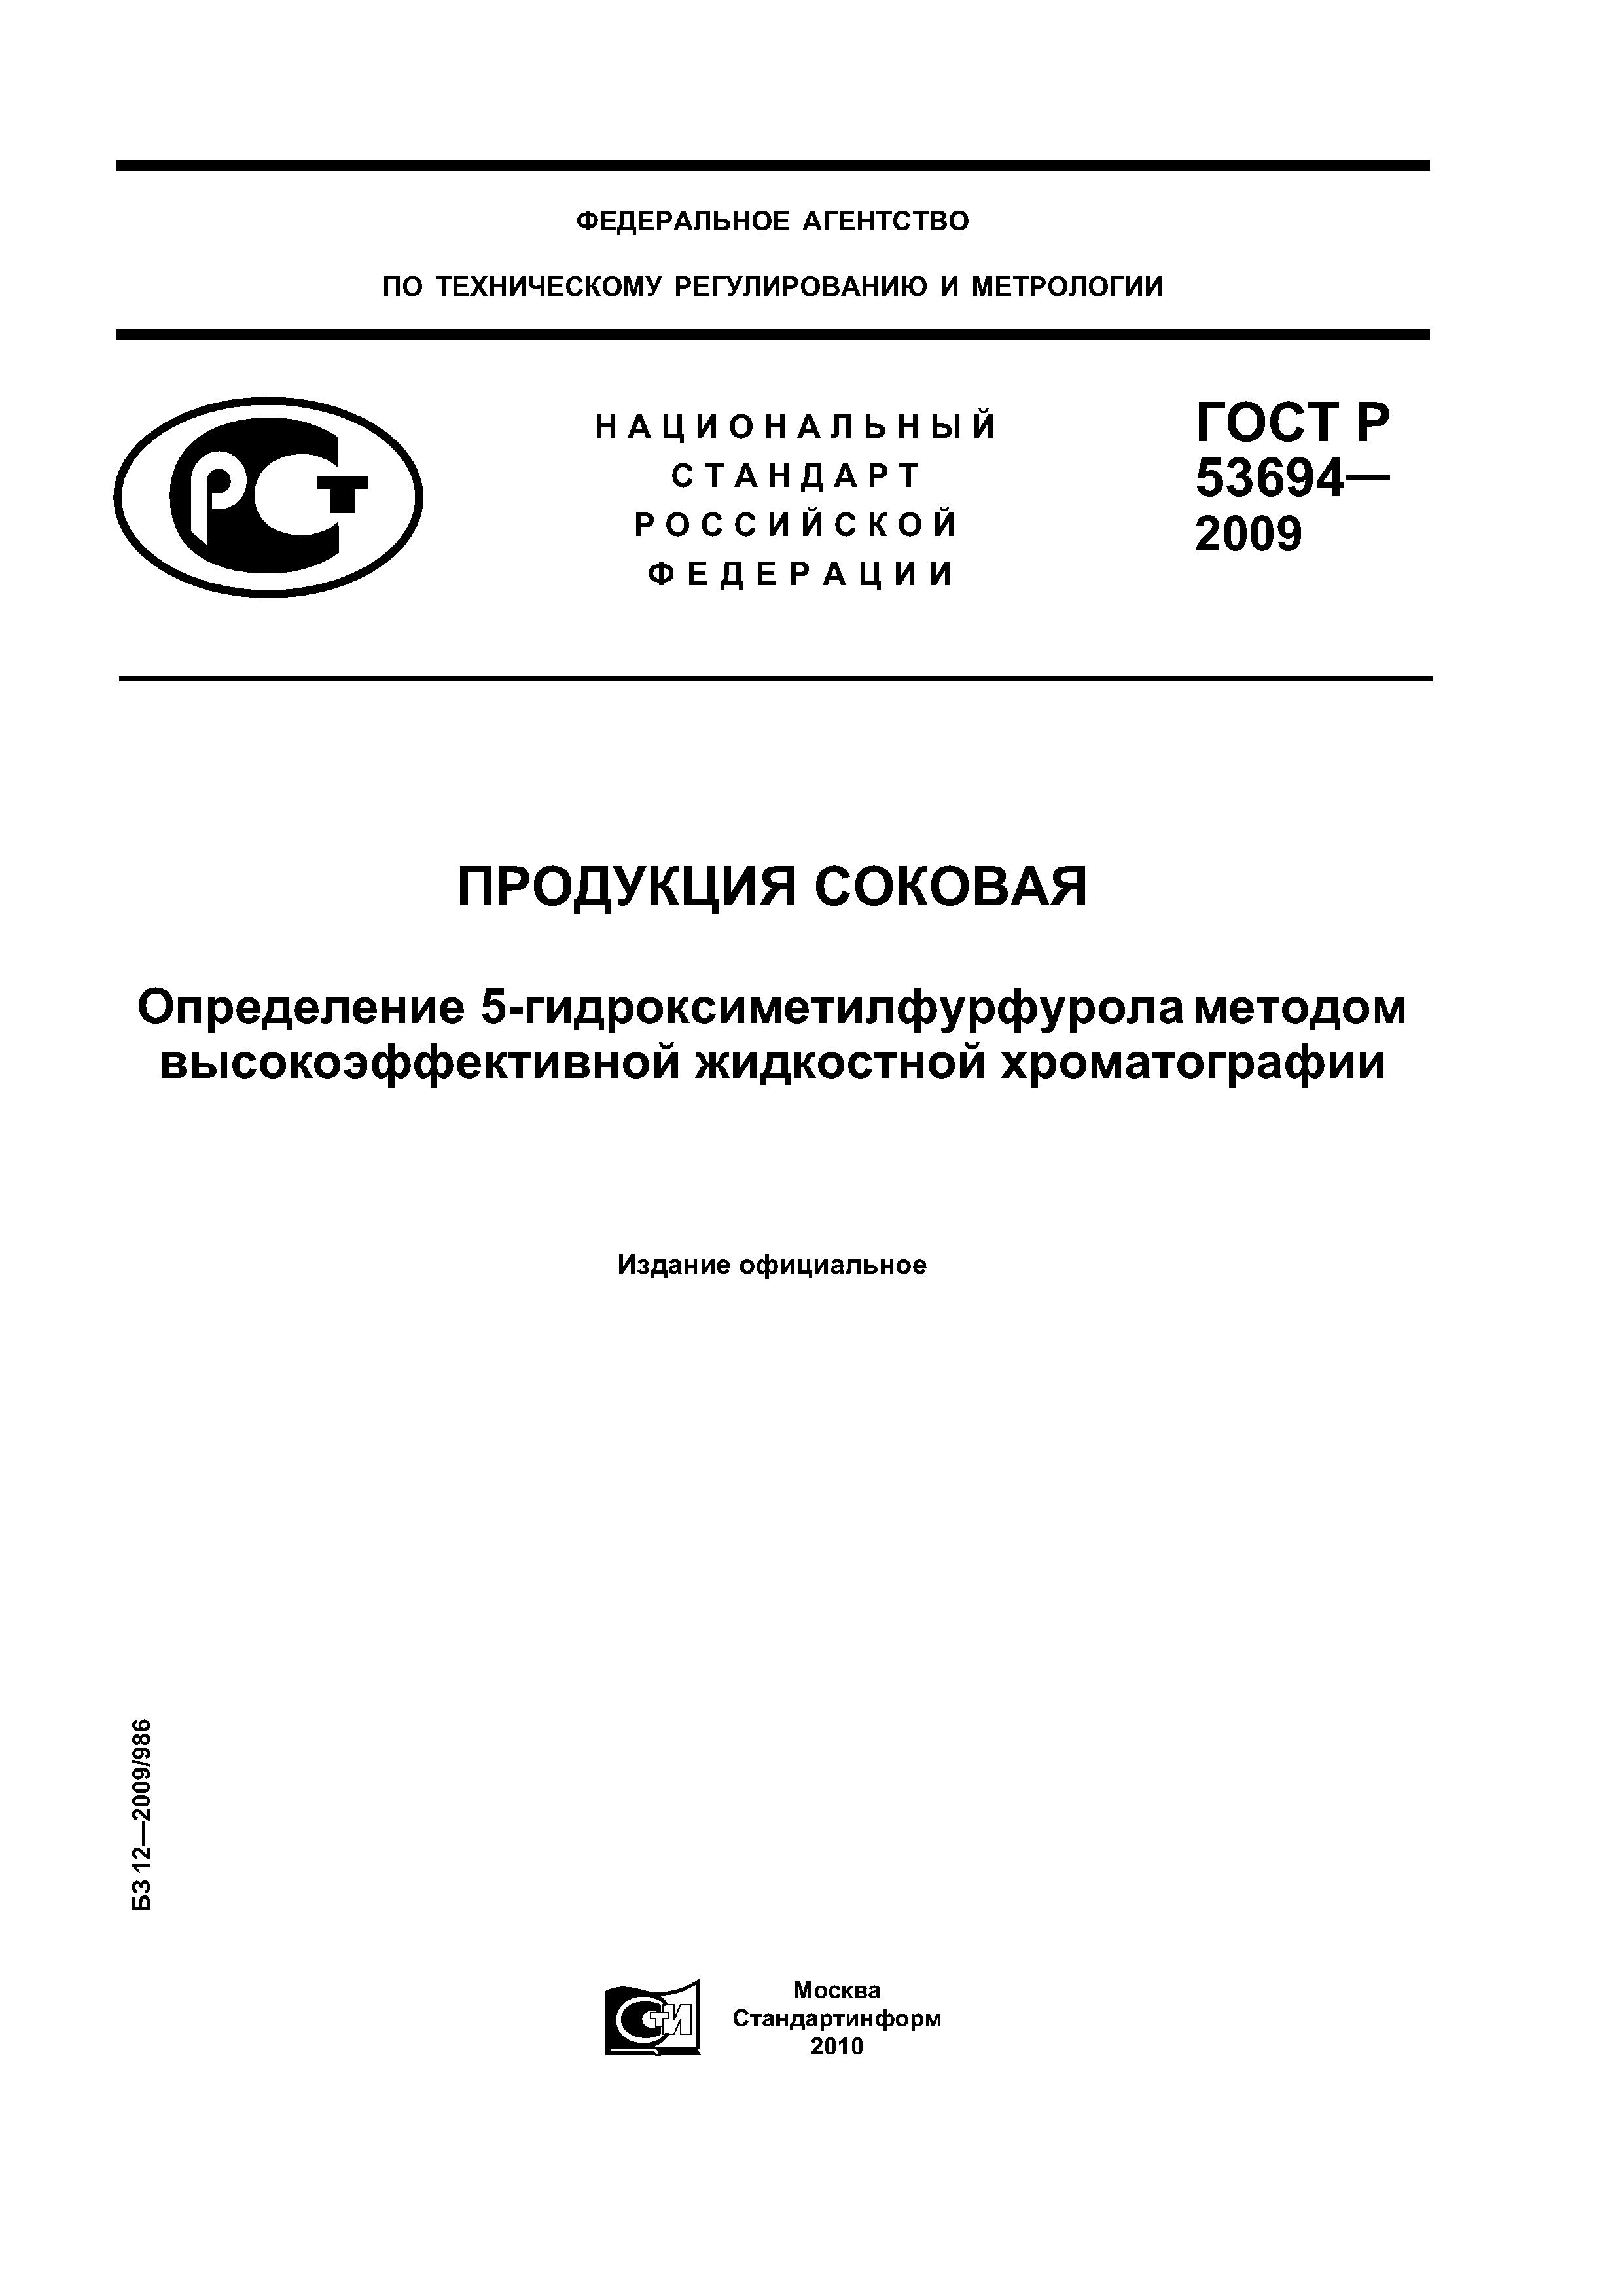 ГОСТ Р 53694-2009